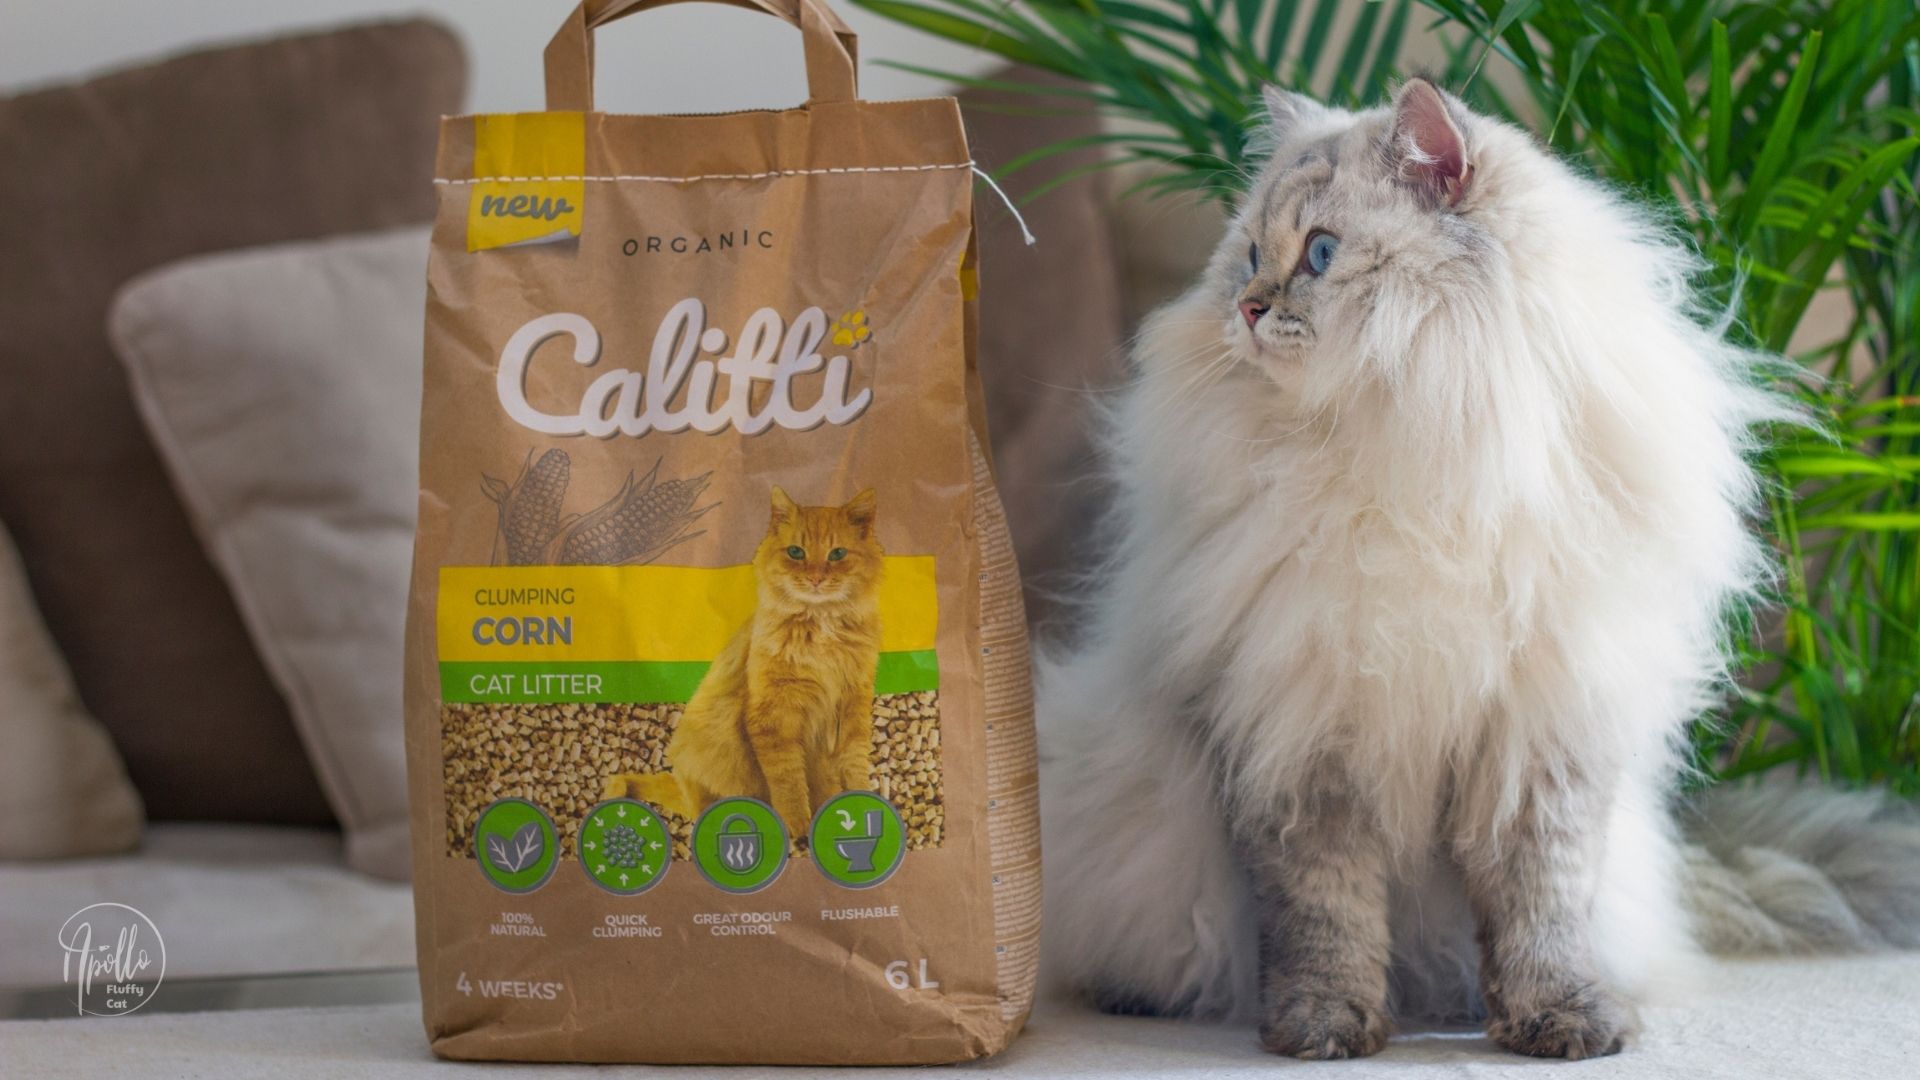 Review: Calitti Corn cat litter